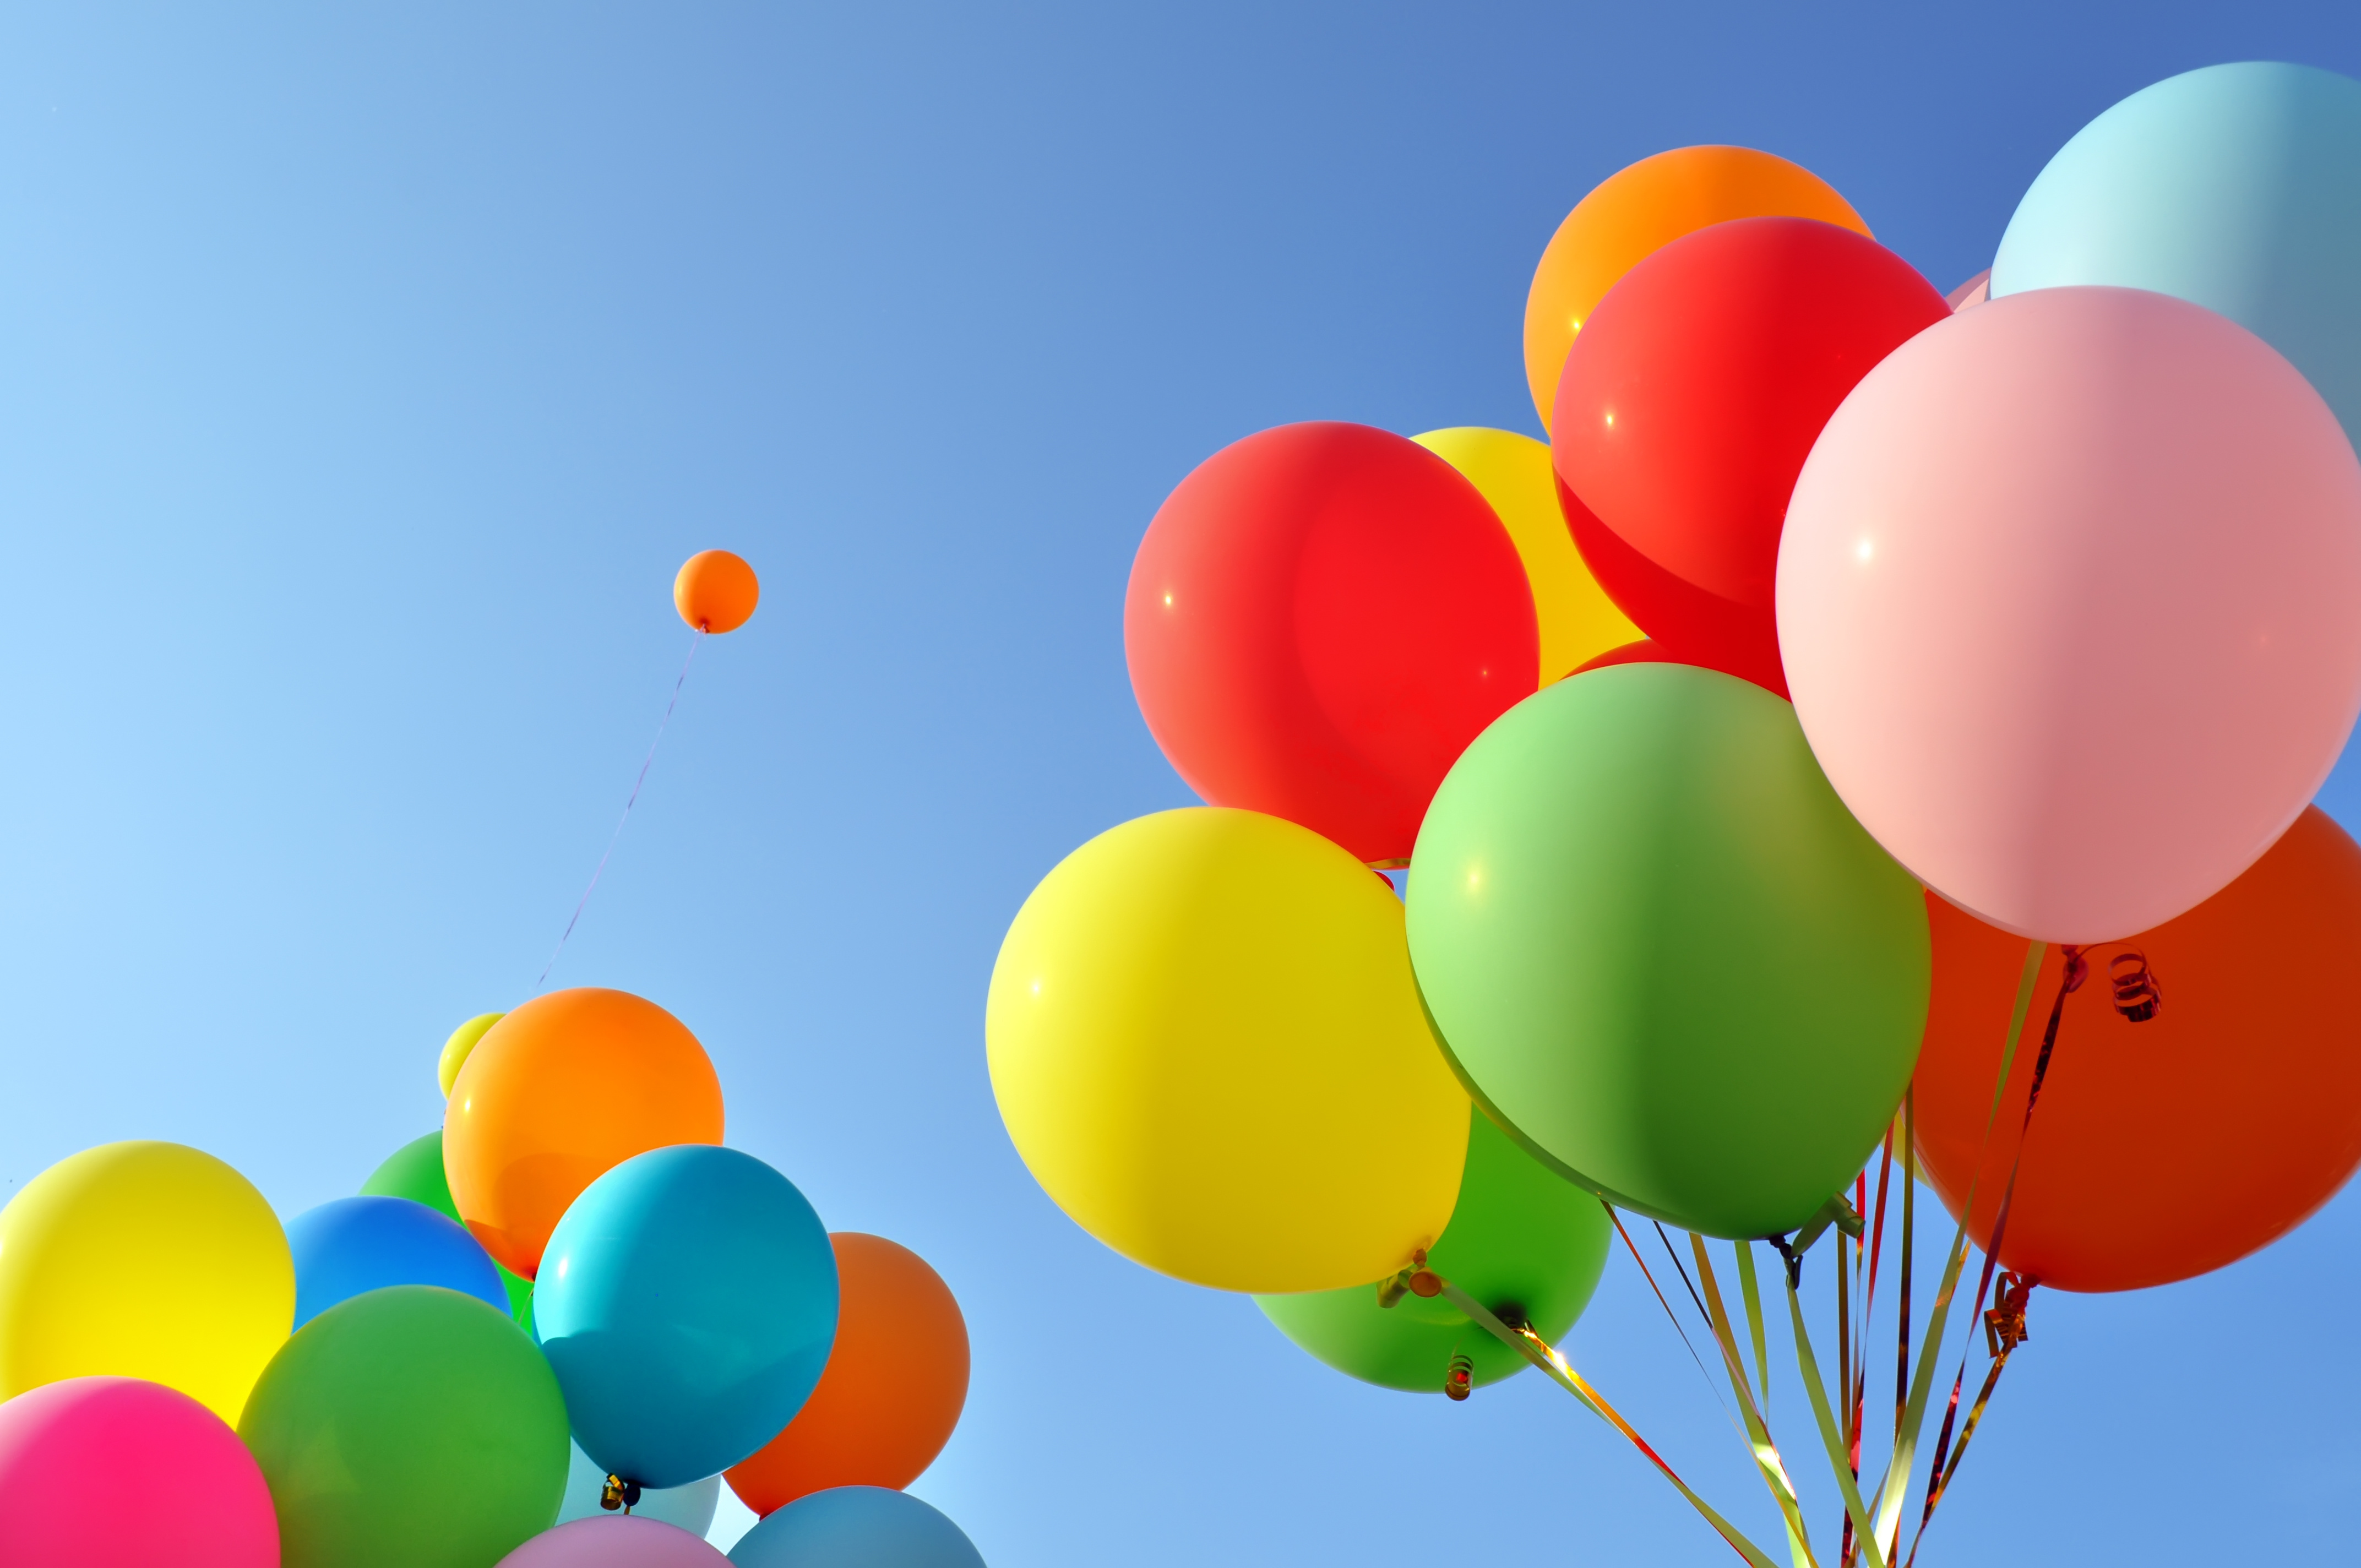 wallpaper balon,balloon,daytime,hot air ballooning,sky,party supply